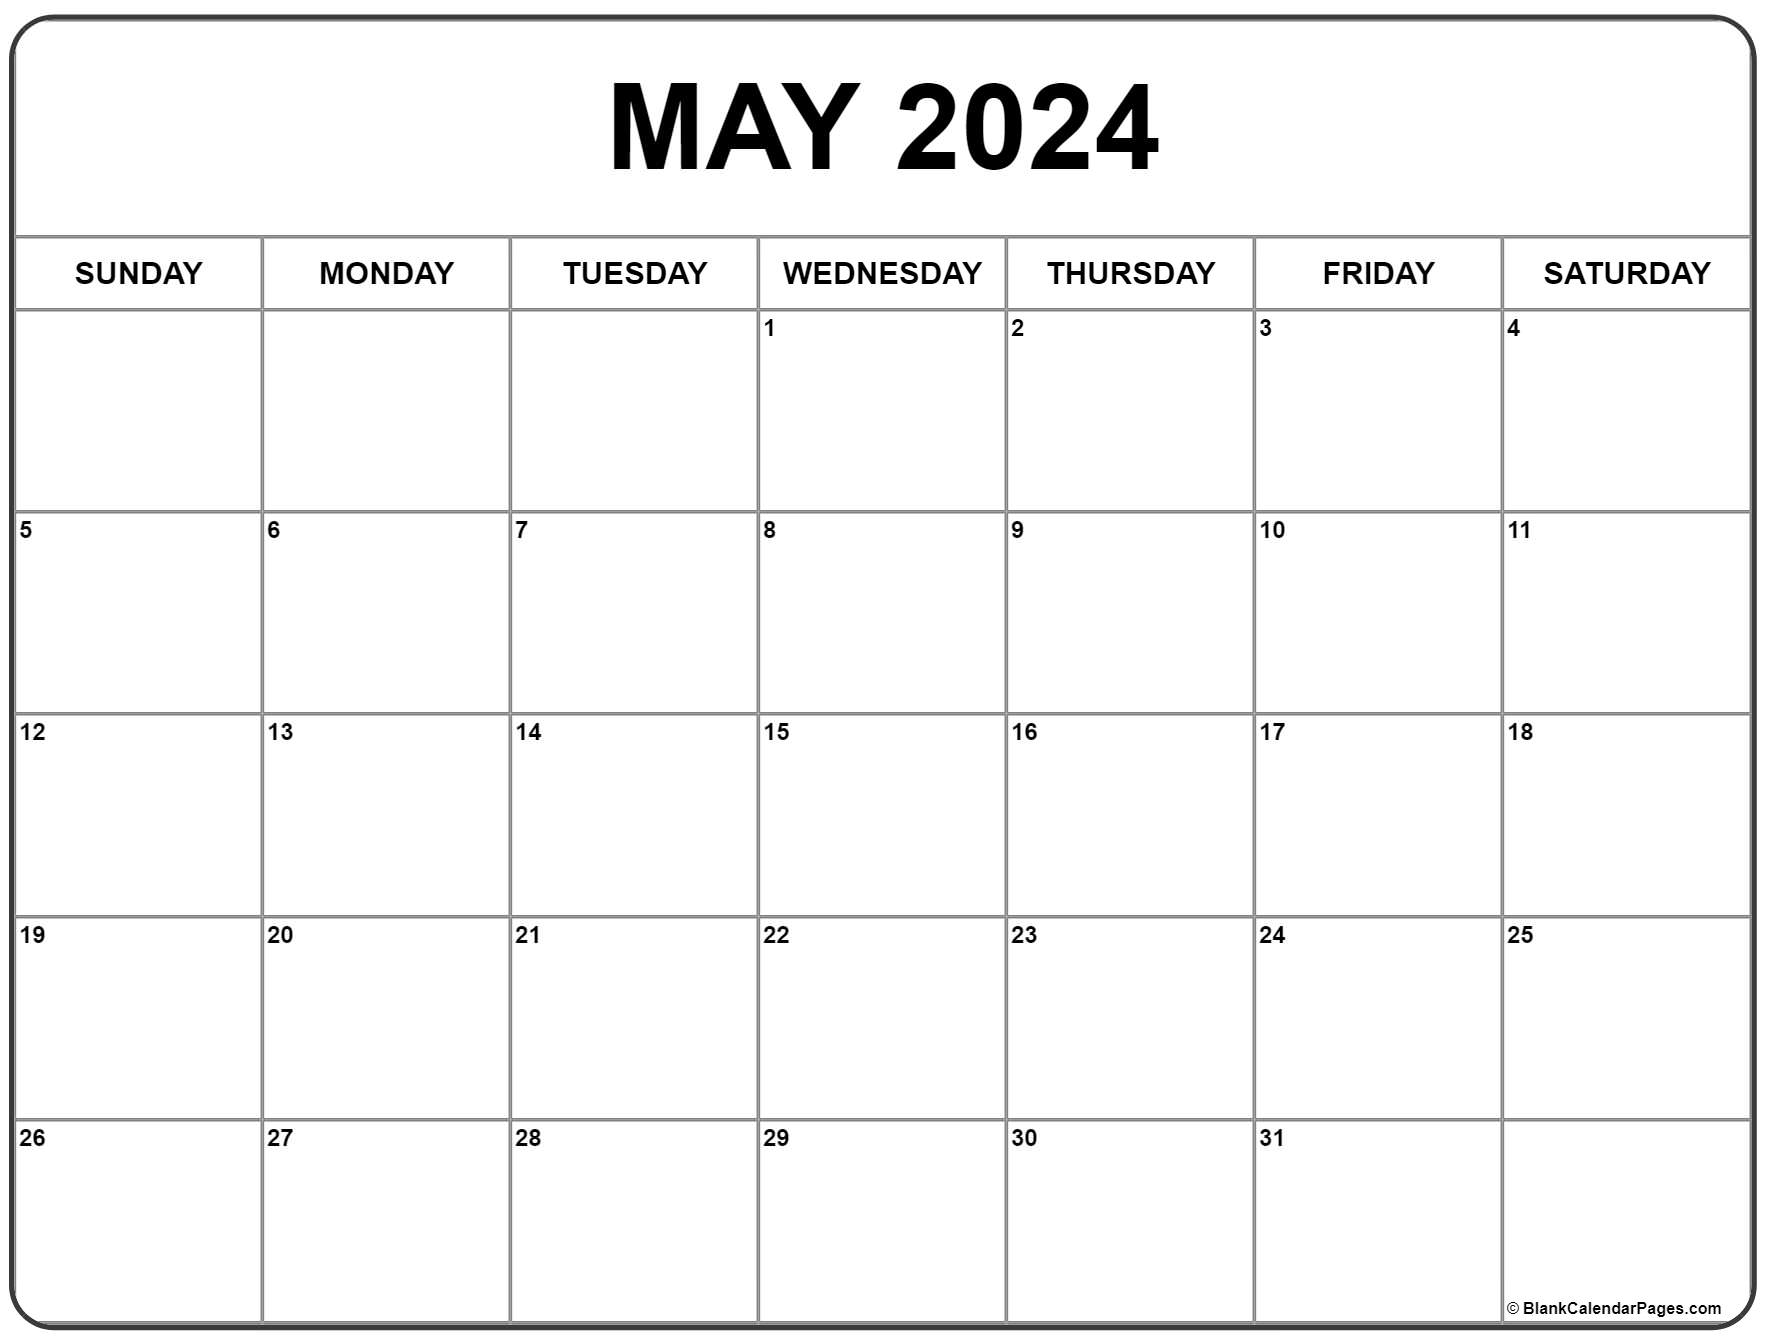 May 2024 Calendar | Free Printable Calendar for 2024 May Calendar Free Printable